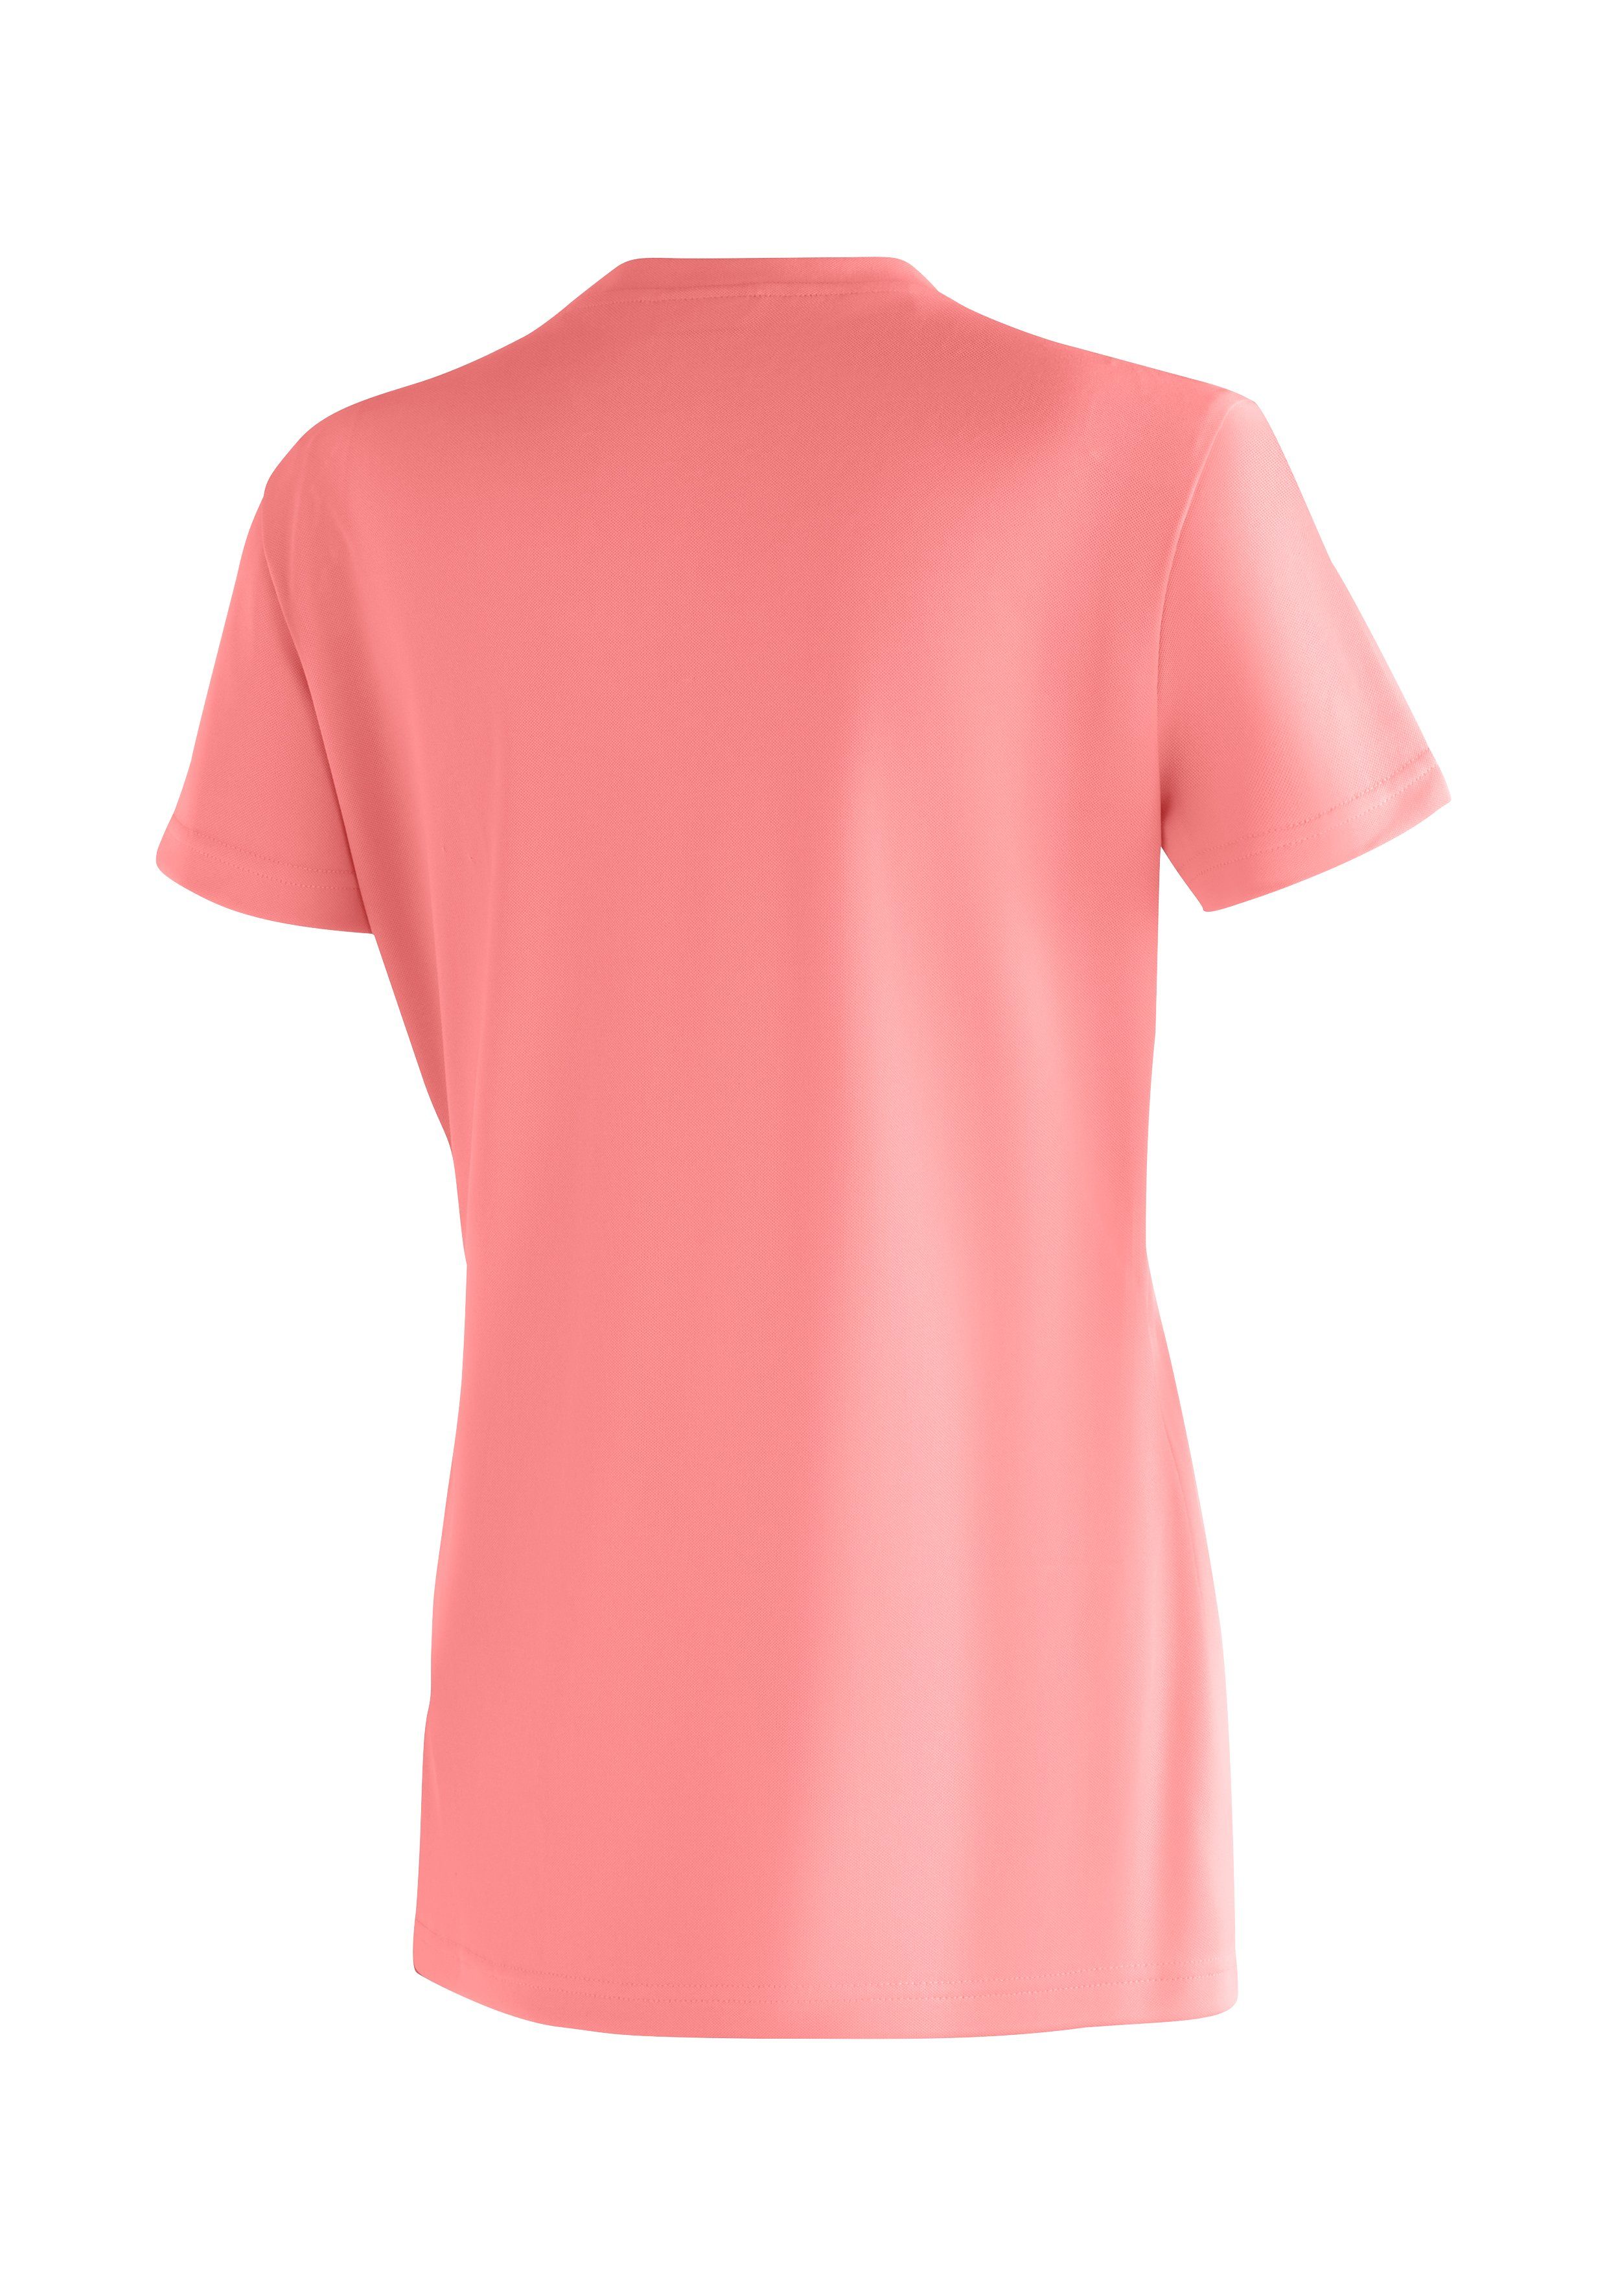 perlrosa Waltraut Funktional Funktionsshirt Maier hoher Print mit Sports Passformstabilität vielseitiges T-Shirt